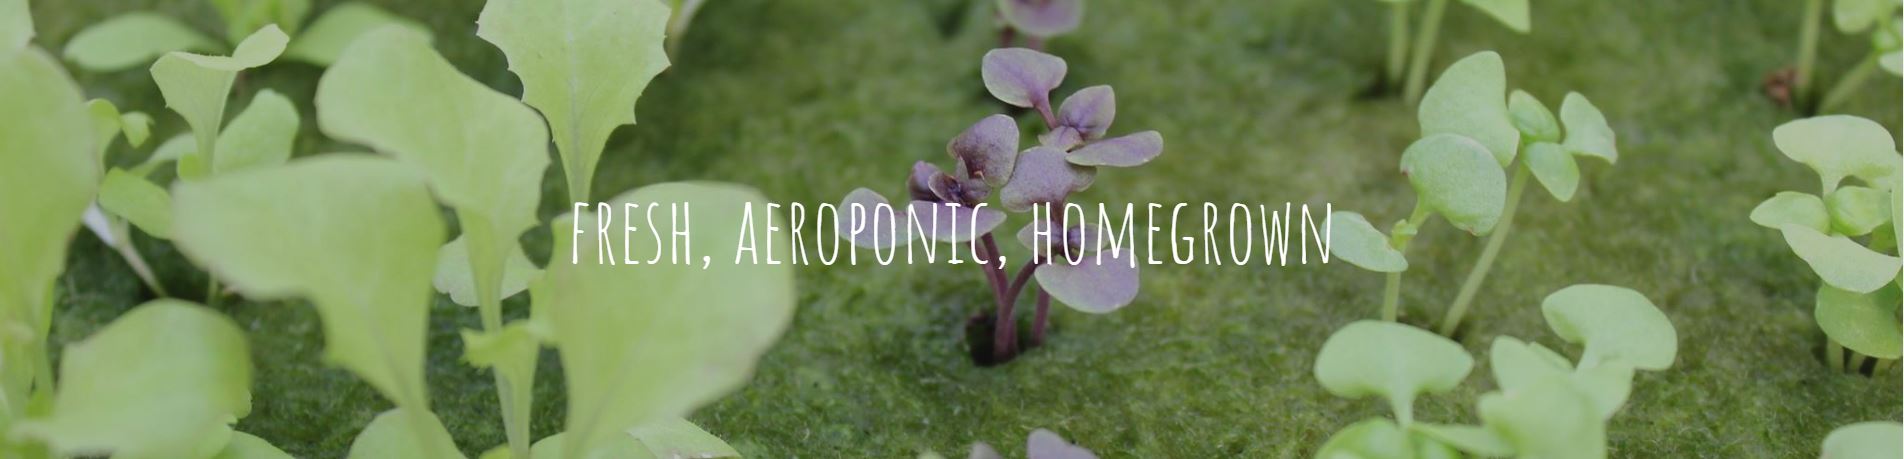 Fresh, Aeroponic, Homegrown